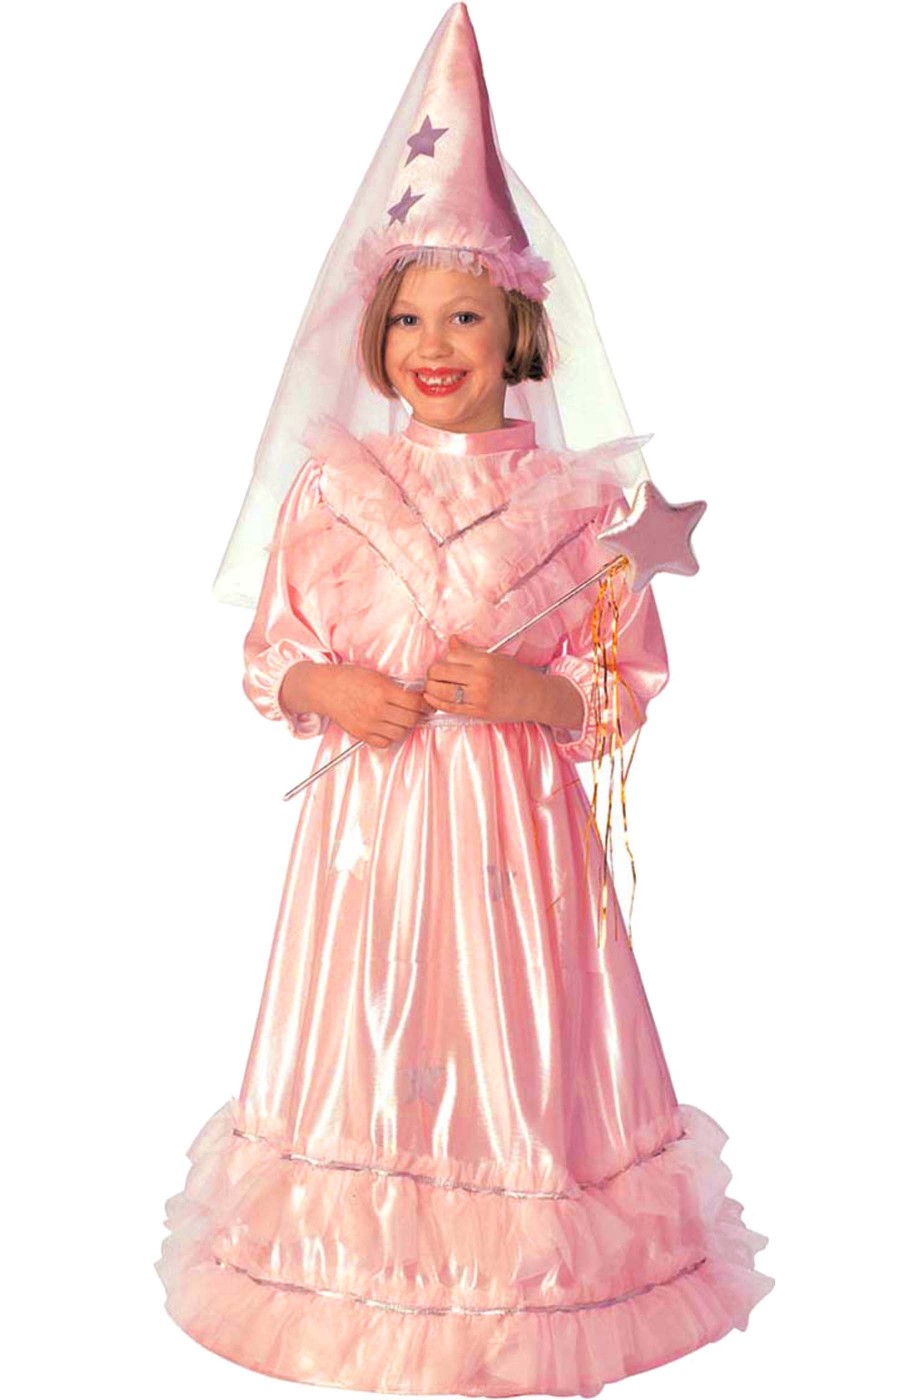 Rubie s Costume carnevale Principessa Pinky bambina vestito fucsia